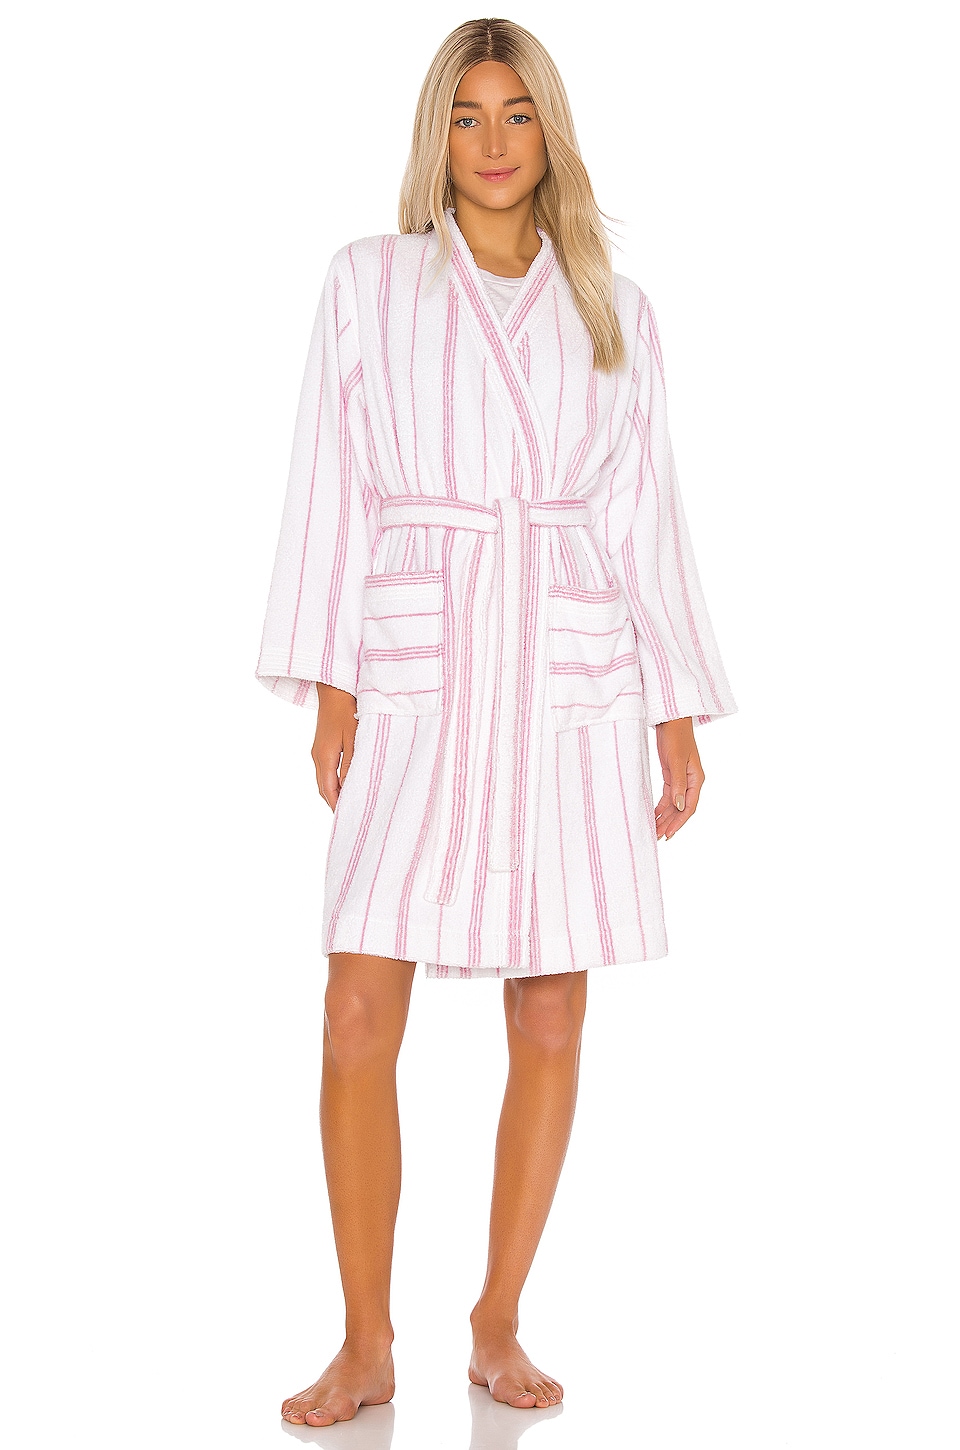 ugg terry cloth robe